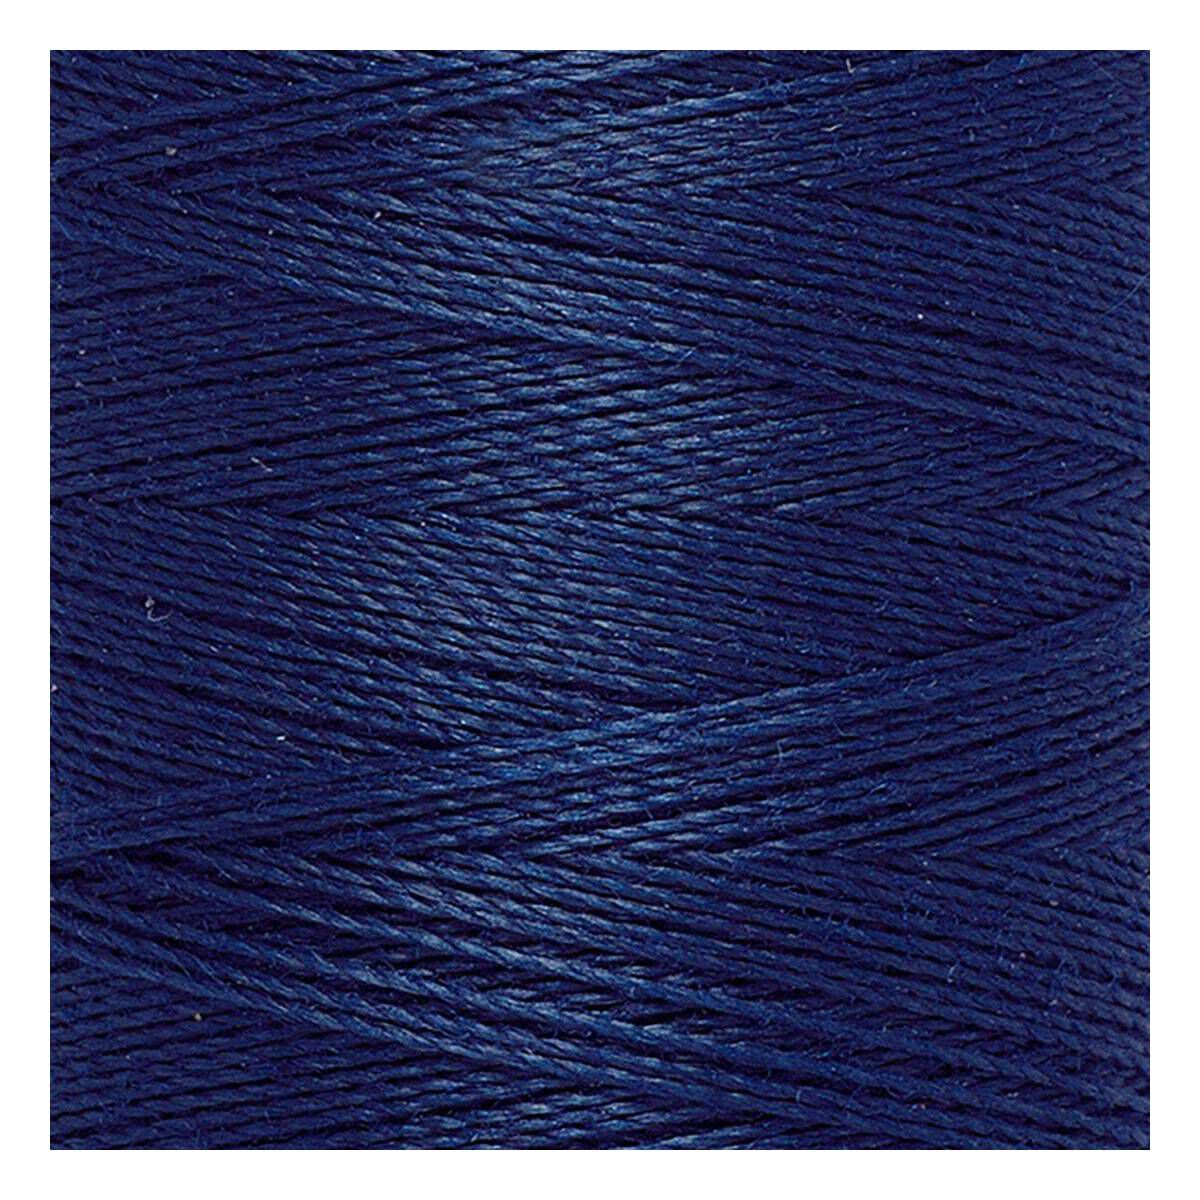 Gütermann Sewing Thread, 100m, Ice Blue - 656